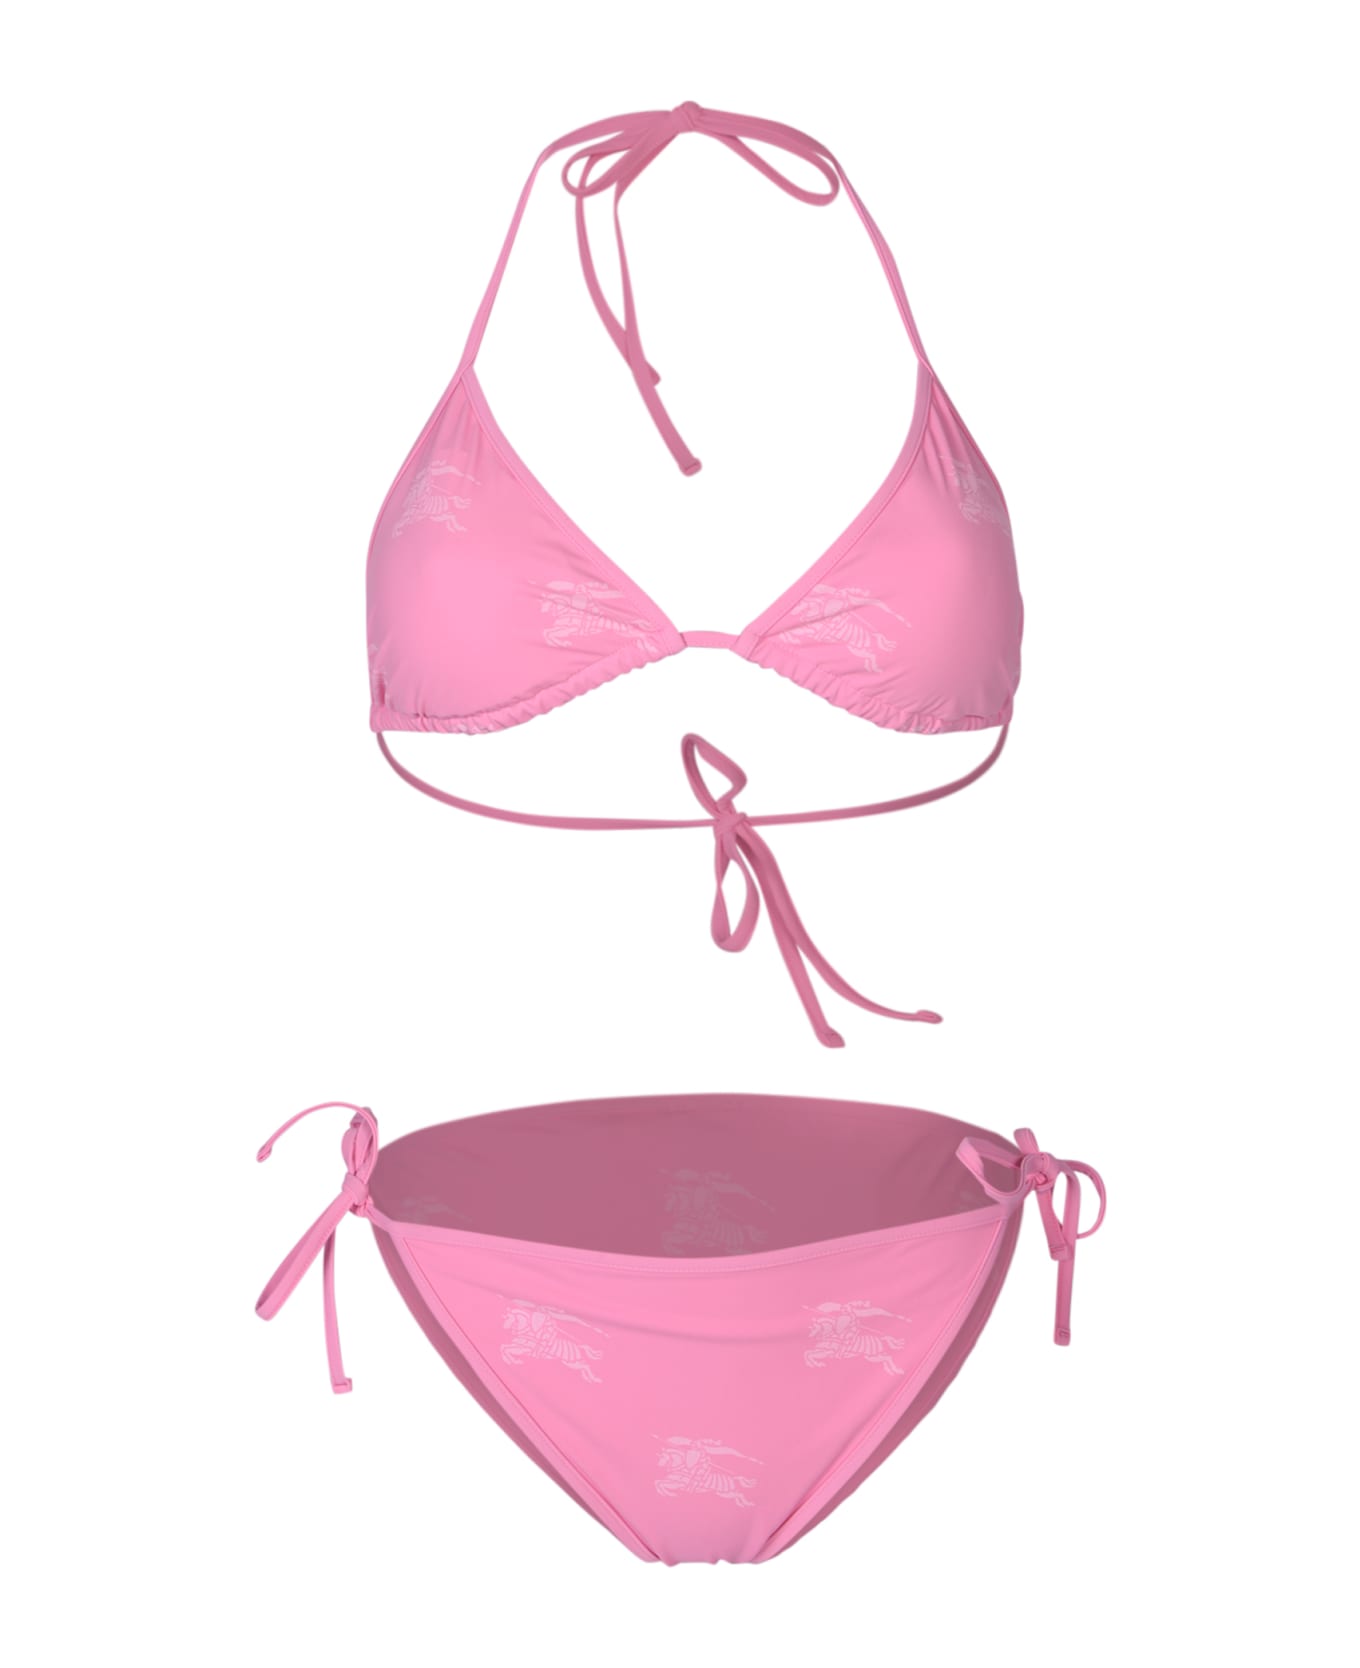 Burberry Pink Stretch Nylon Bikini - Pink ビキニ